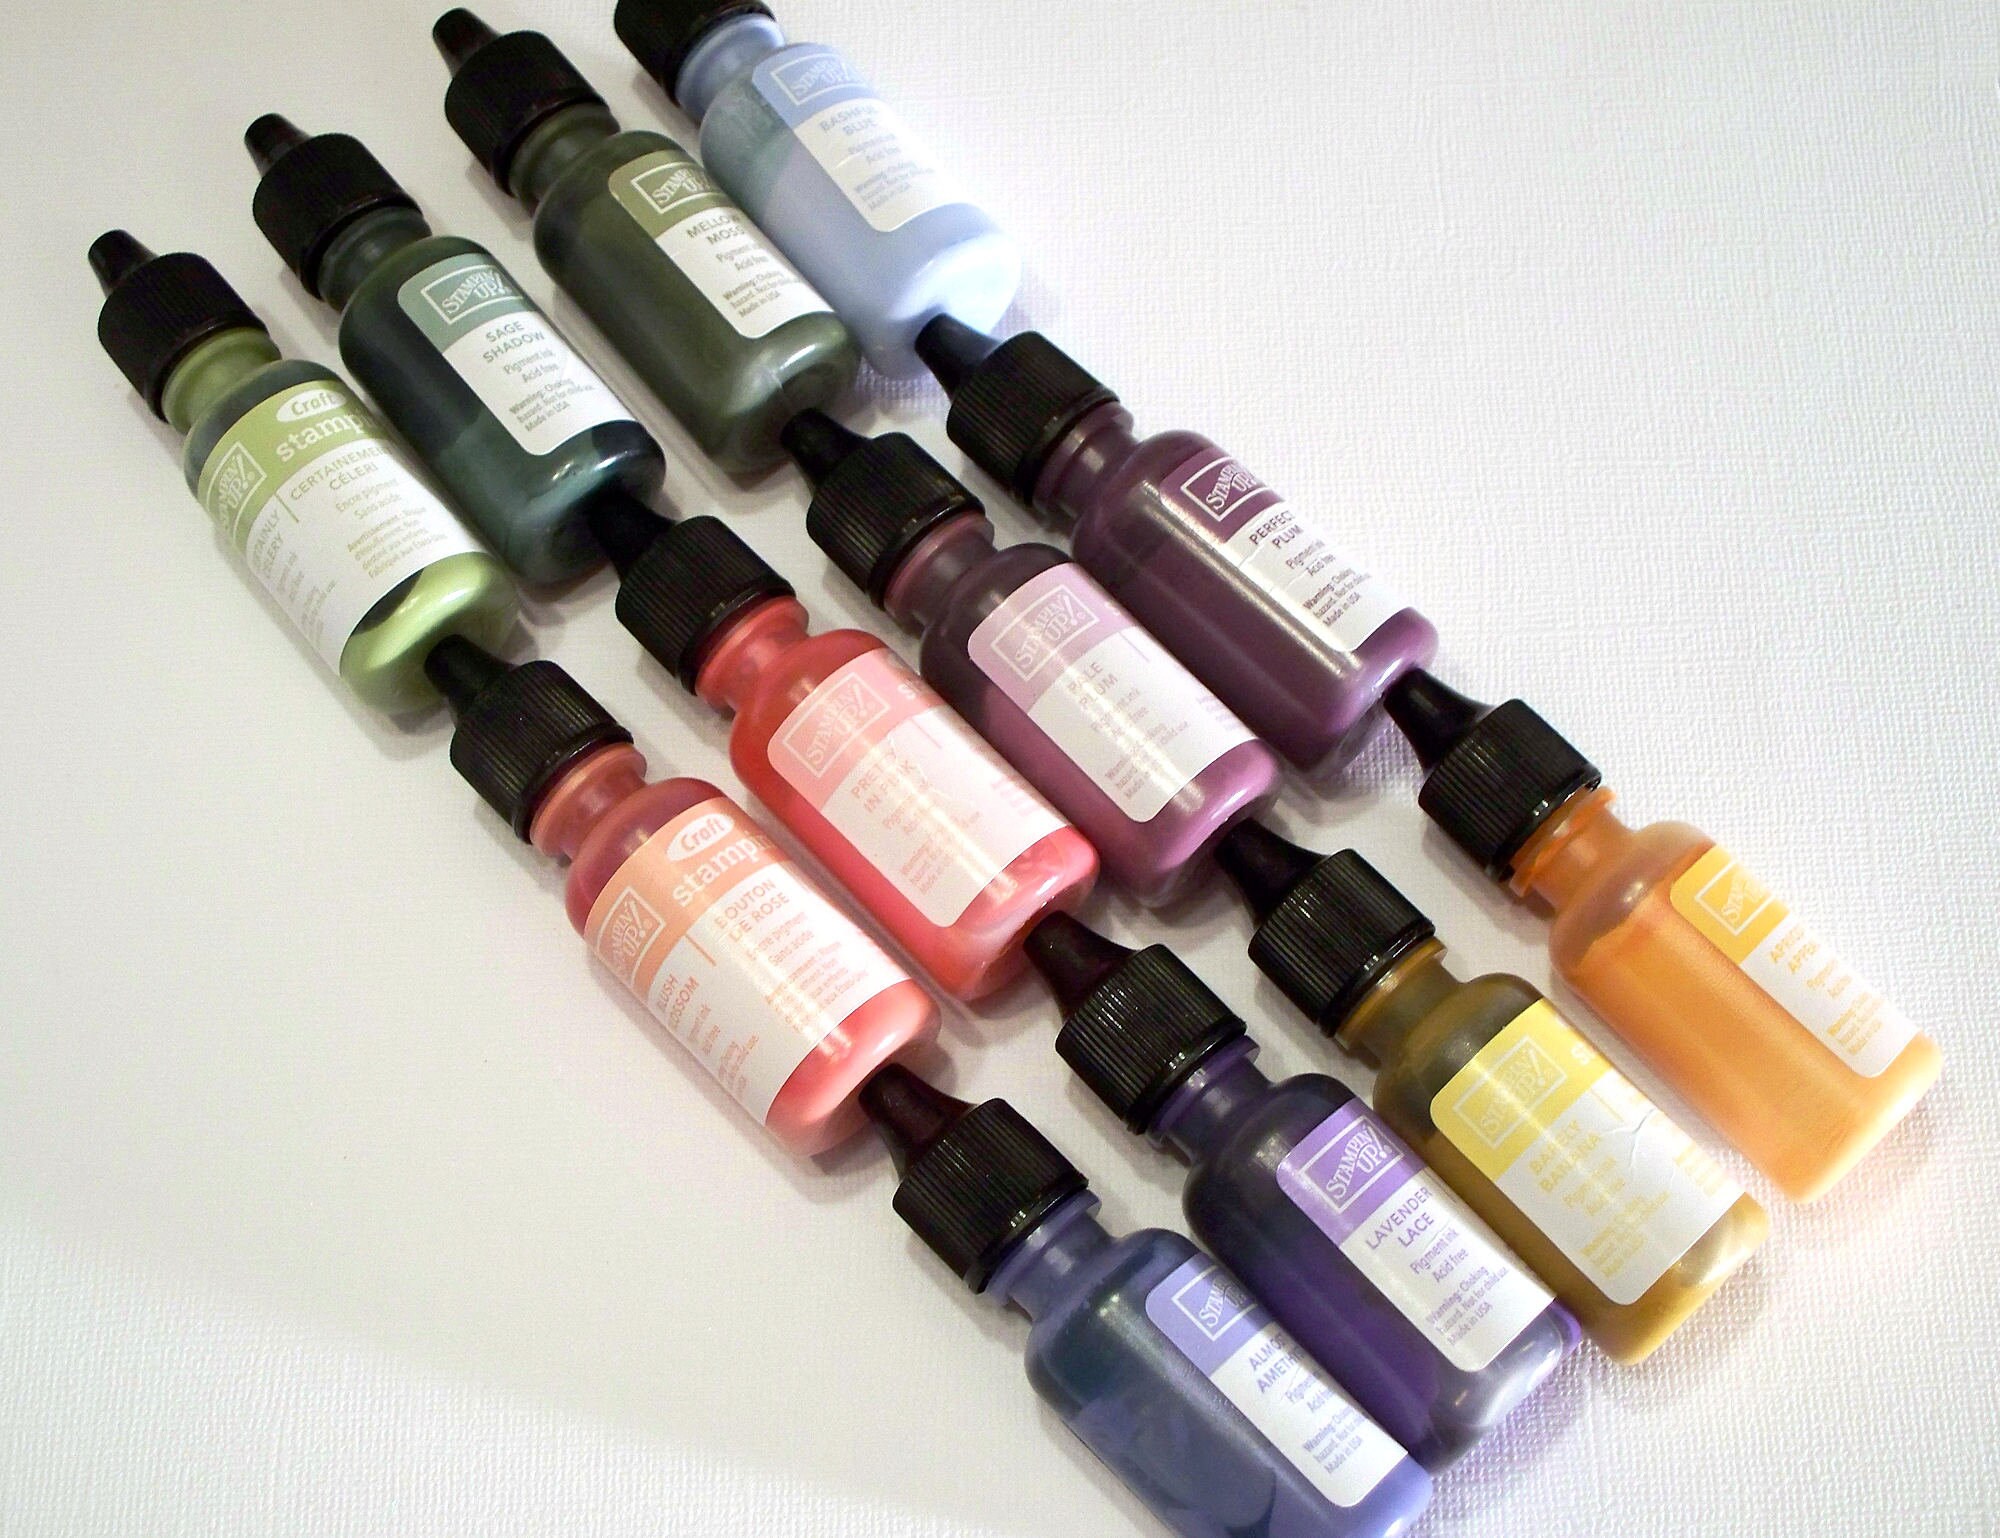 Let's Color Premium Pigment Ink Pads Ranibow Pinks 